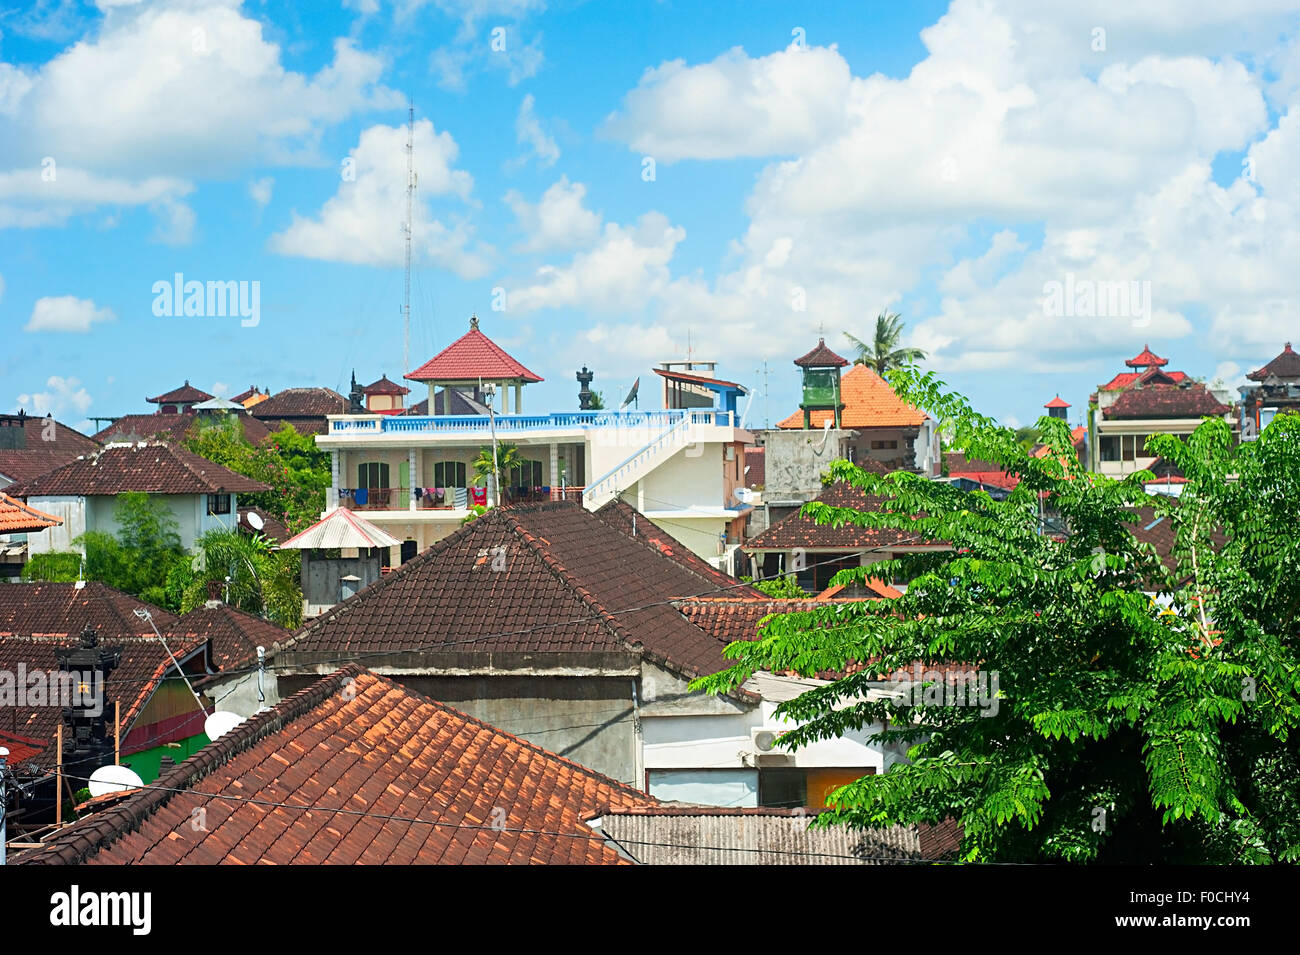 Architecture of Kuta, Bali. Kuta - most popular tourist destination on the island. Stock Photo